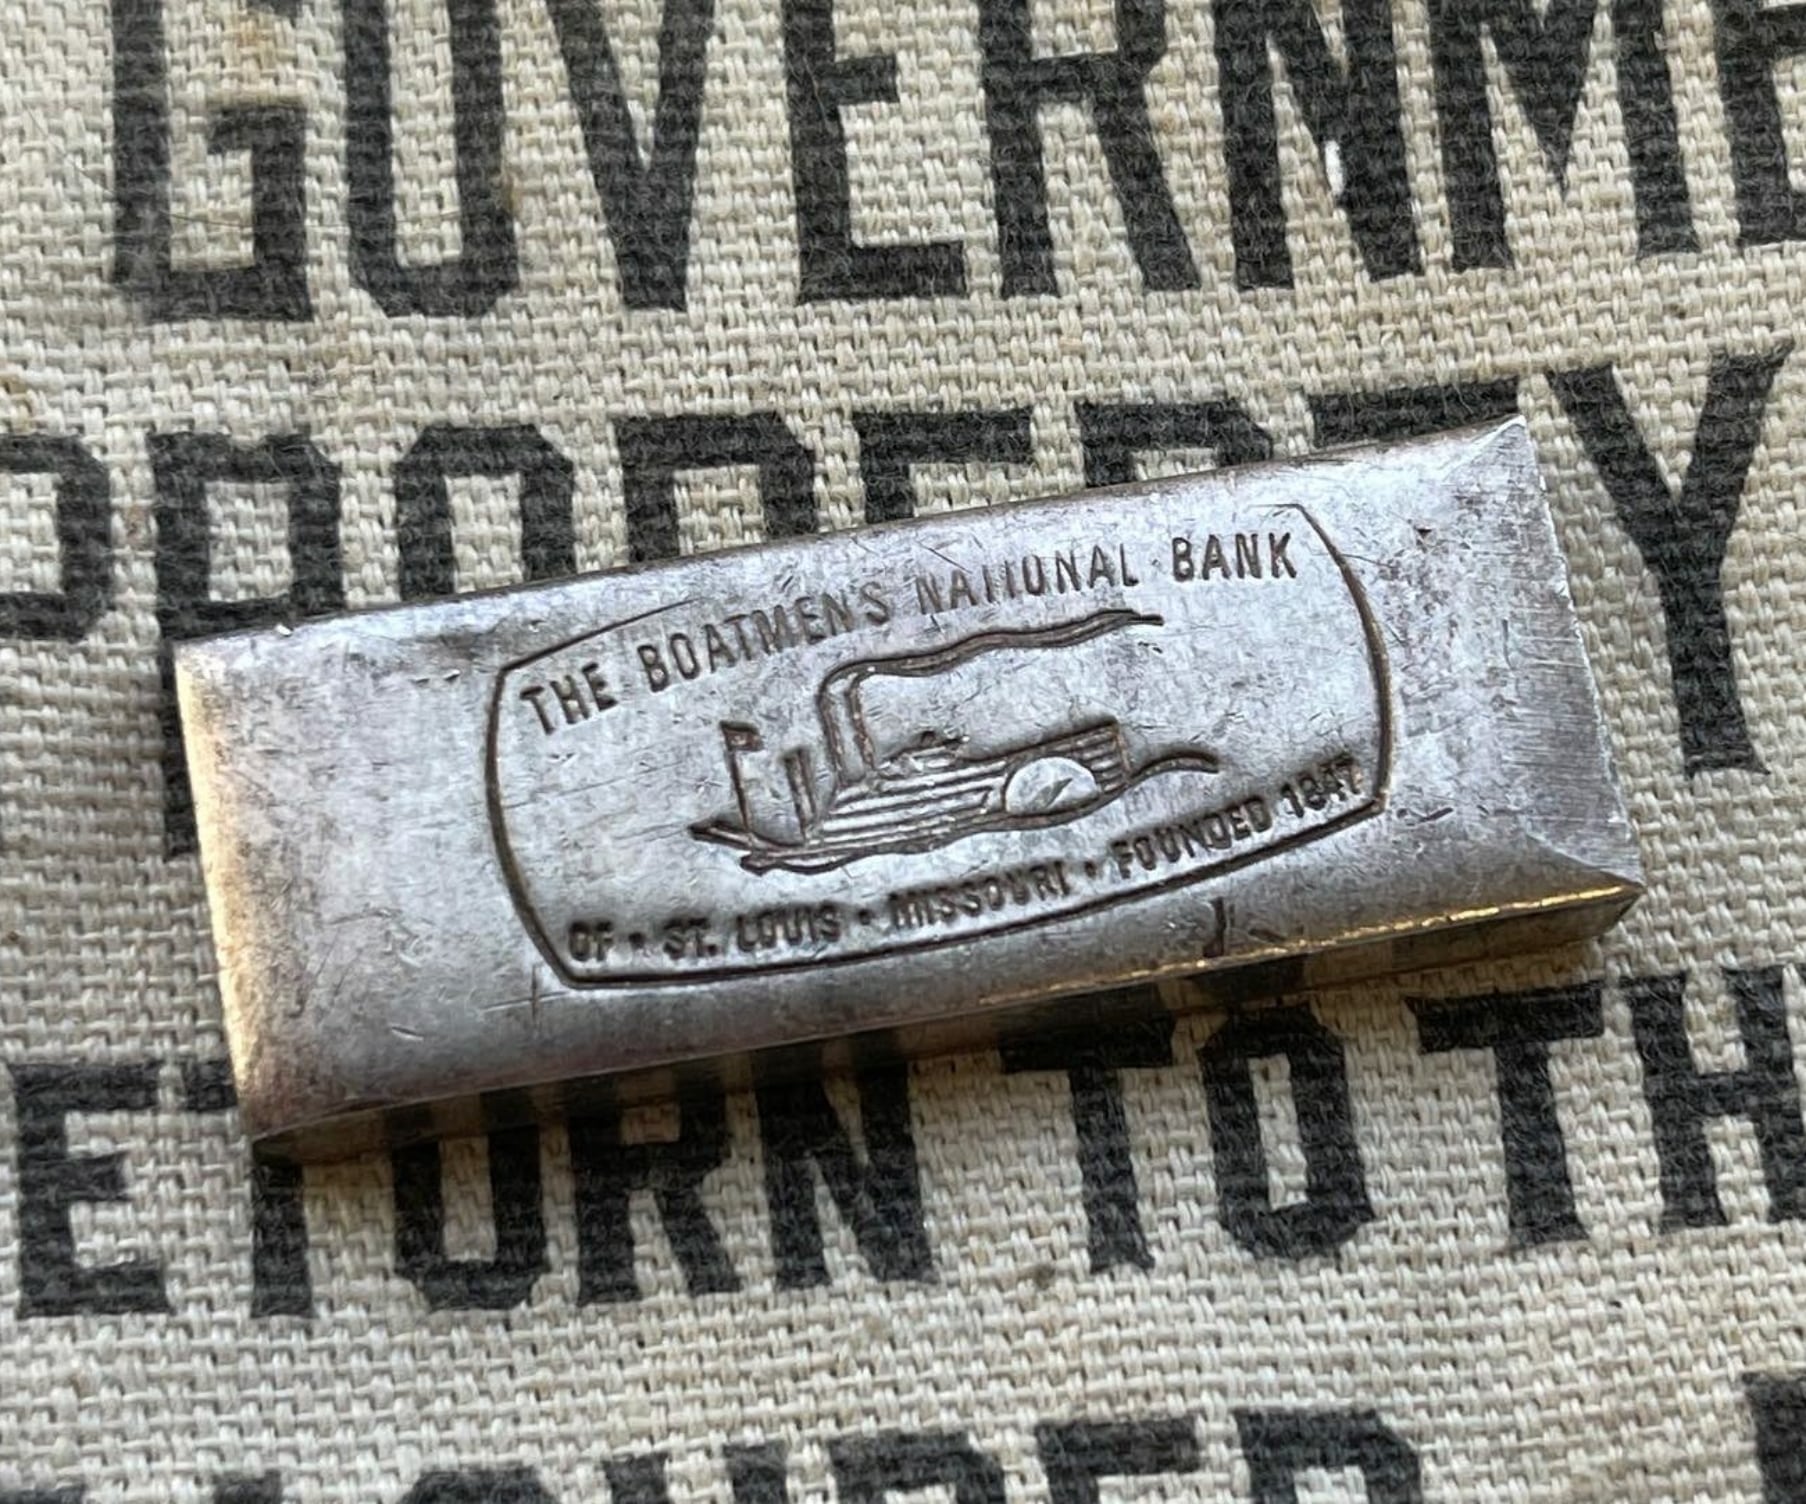 Boatman's Bank 2 oz vintage silver bar front